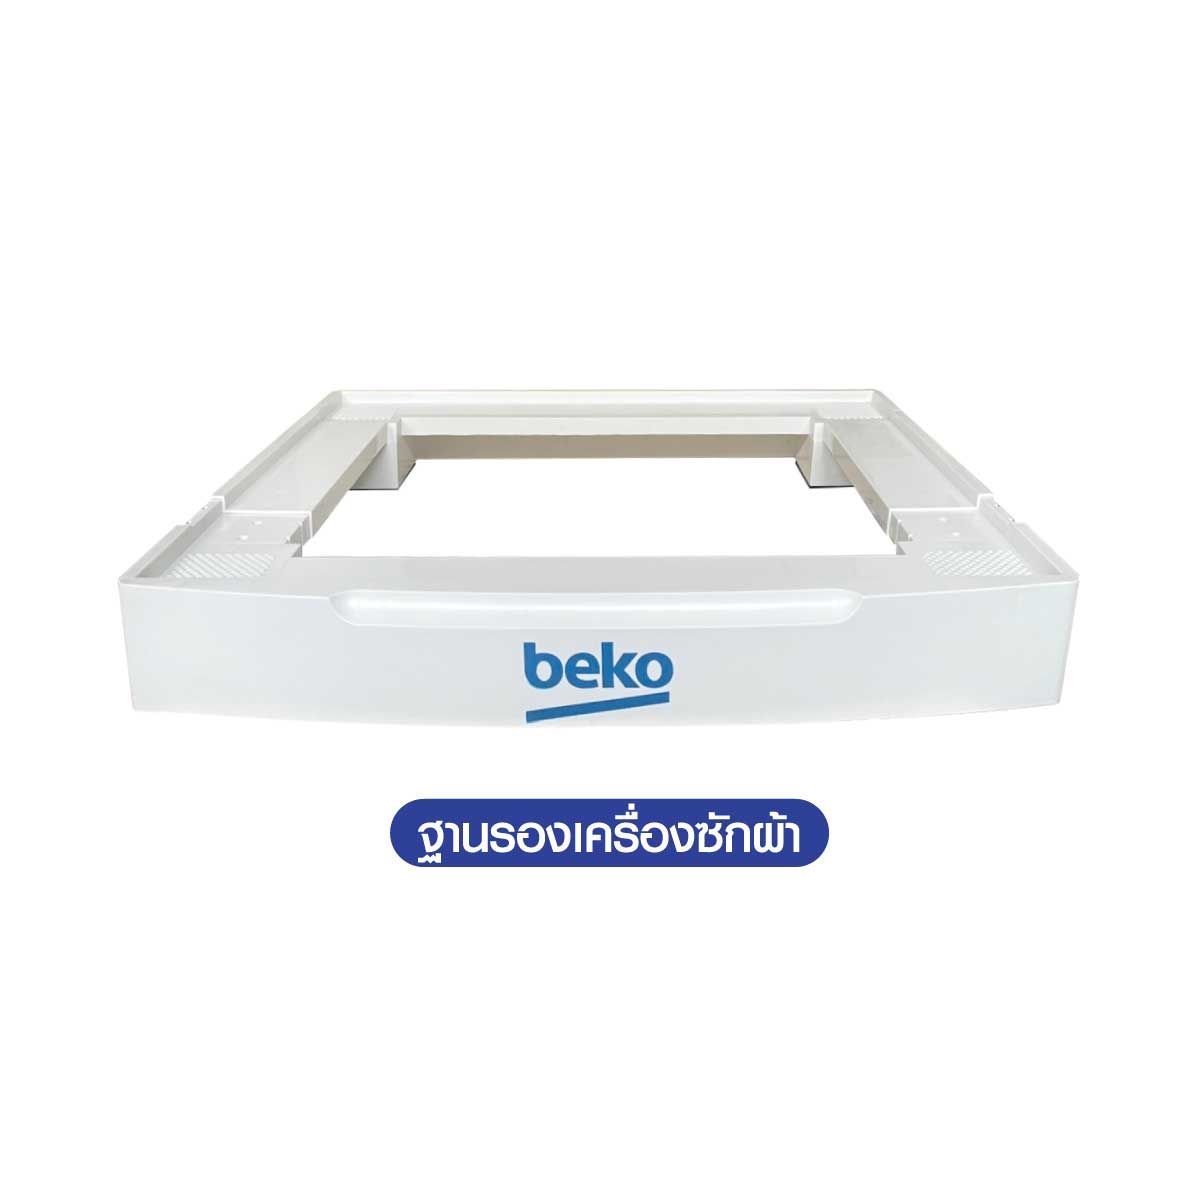 BEKO  เครื่องซักผ้าฝาหน้า 8 กก. Inverter สีขาว  รุ่น รุ่นWCV8612XSOS